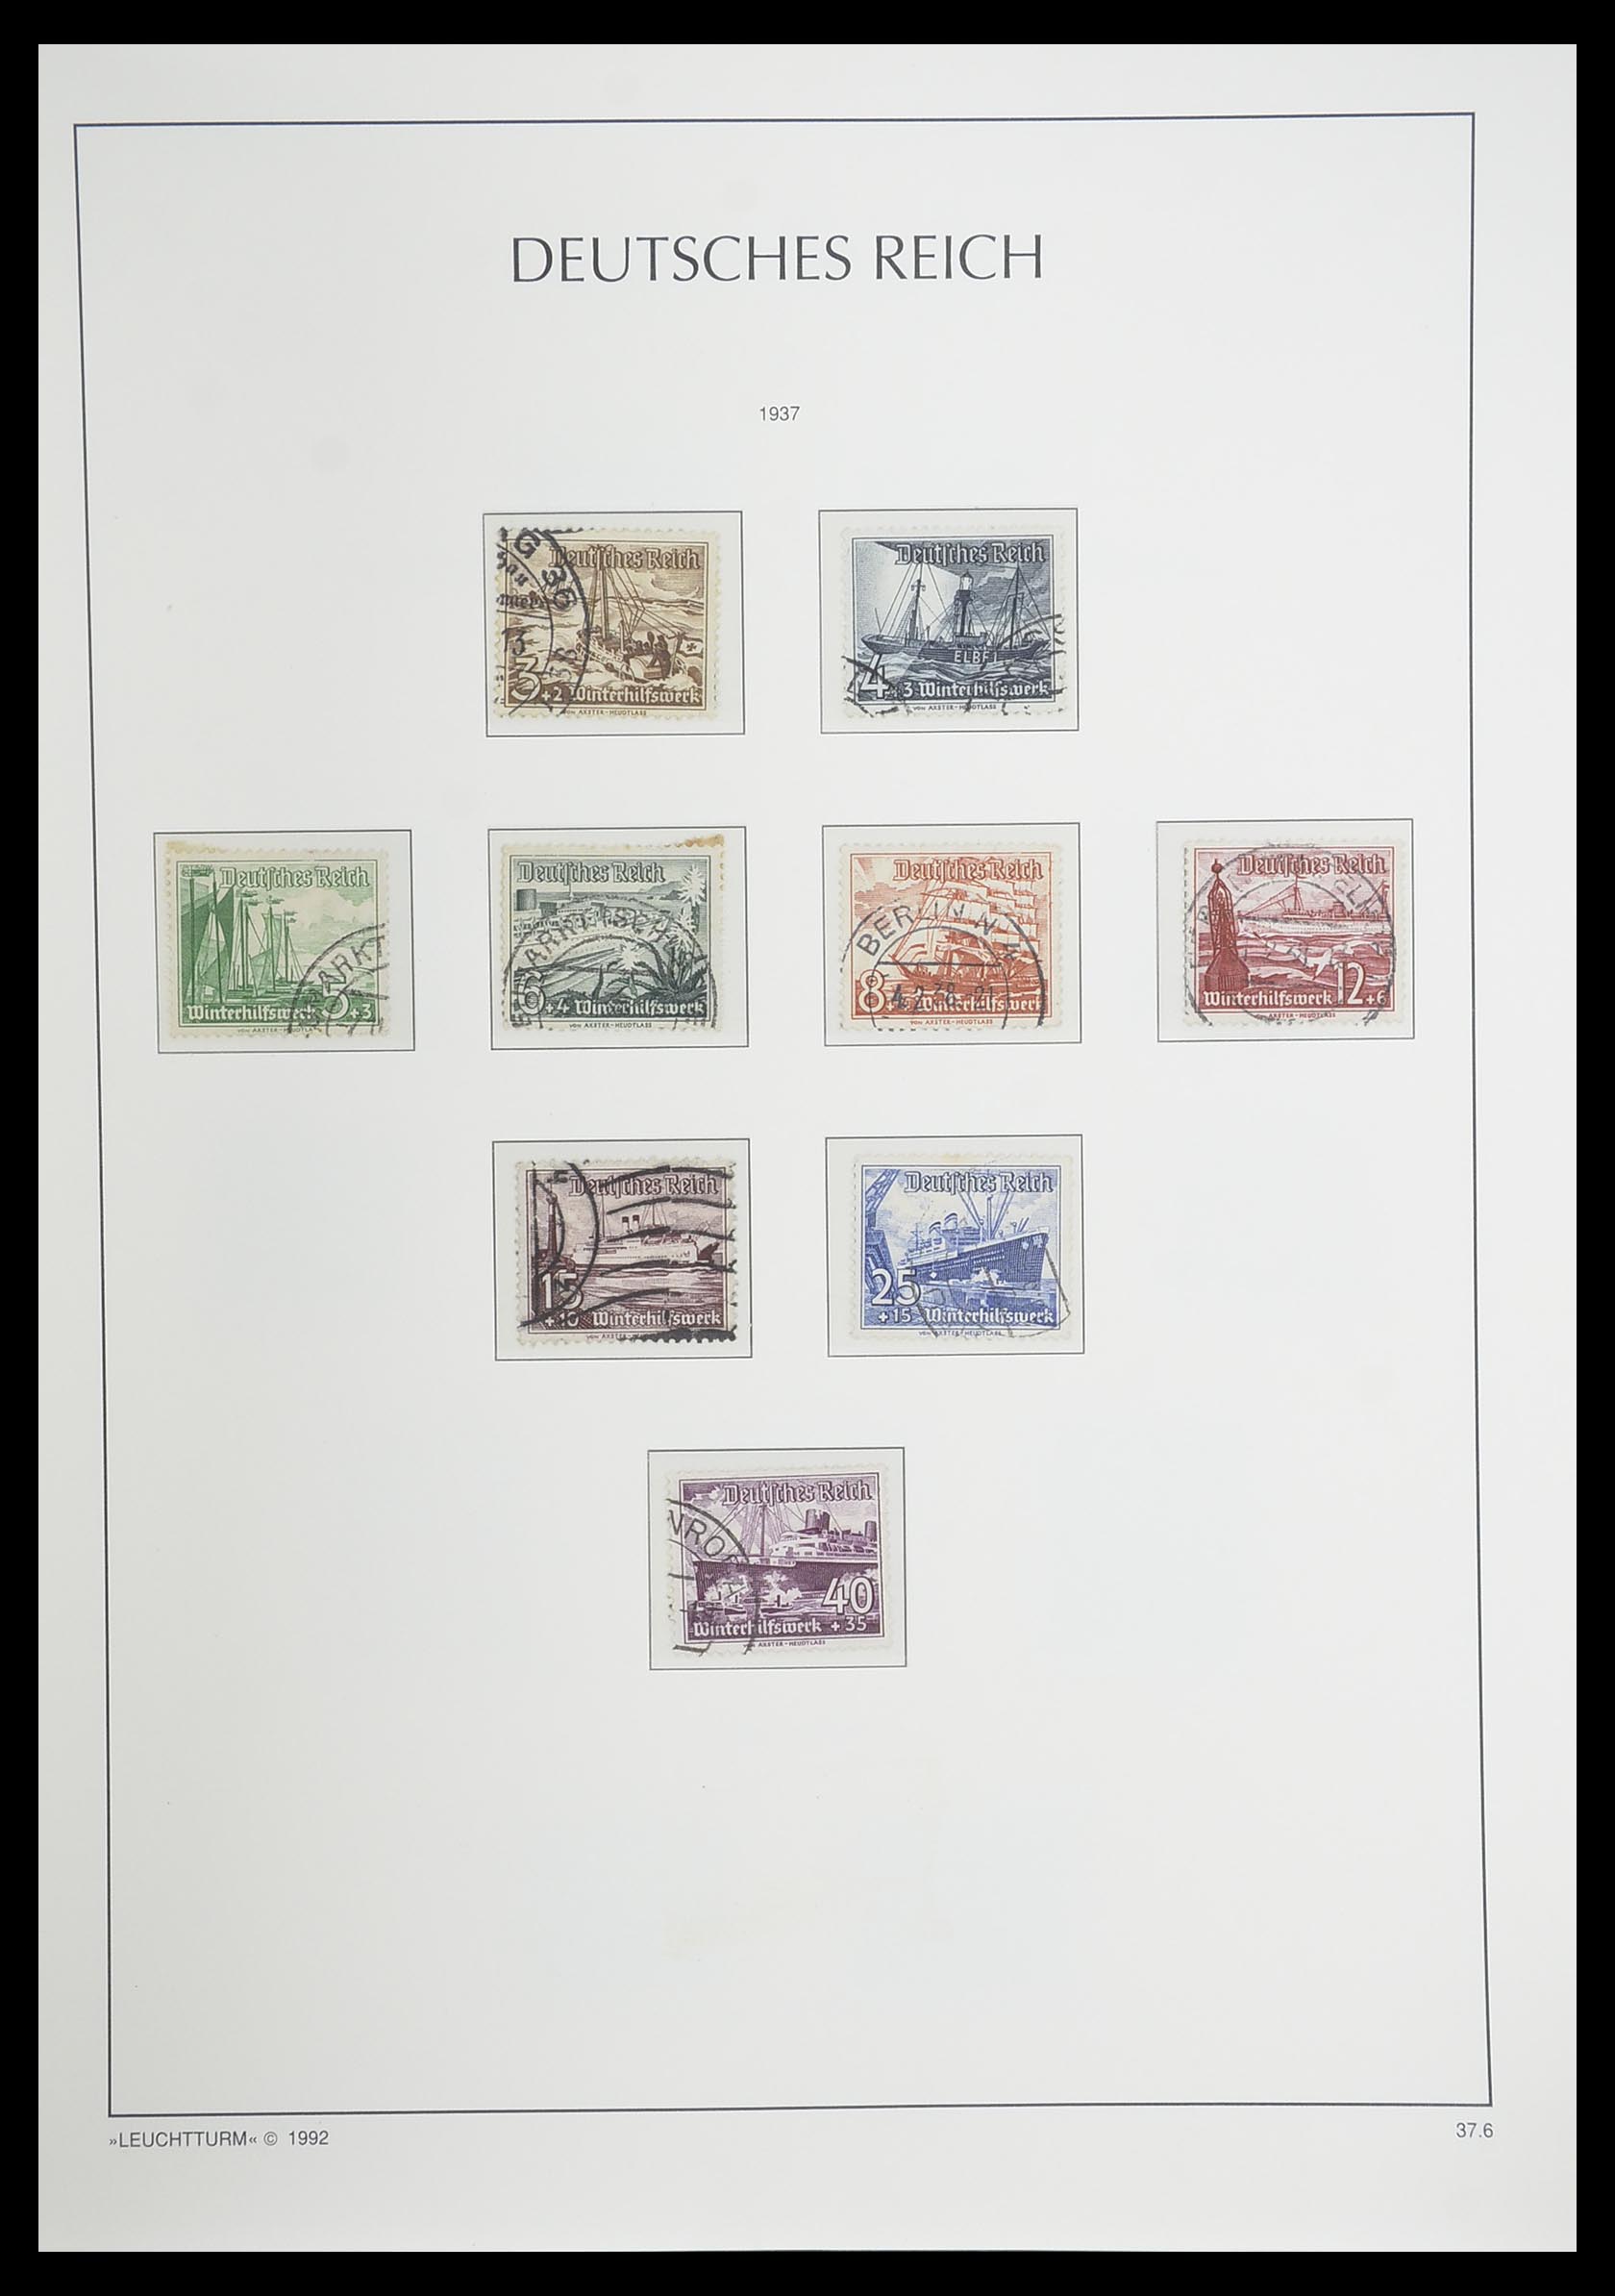 33455 072 - Stamp collection 33455 German Reich 1872-1945.